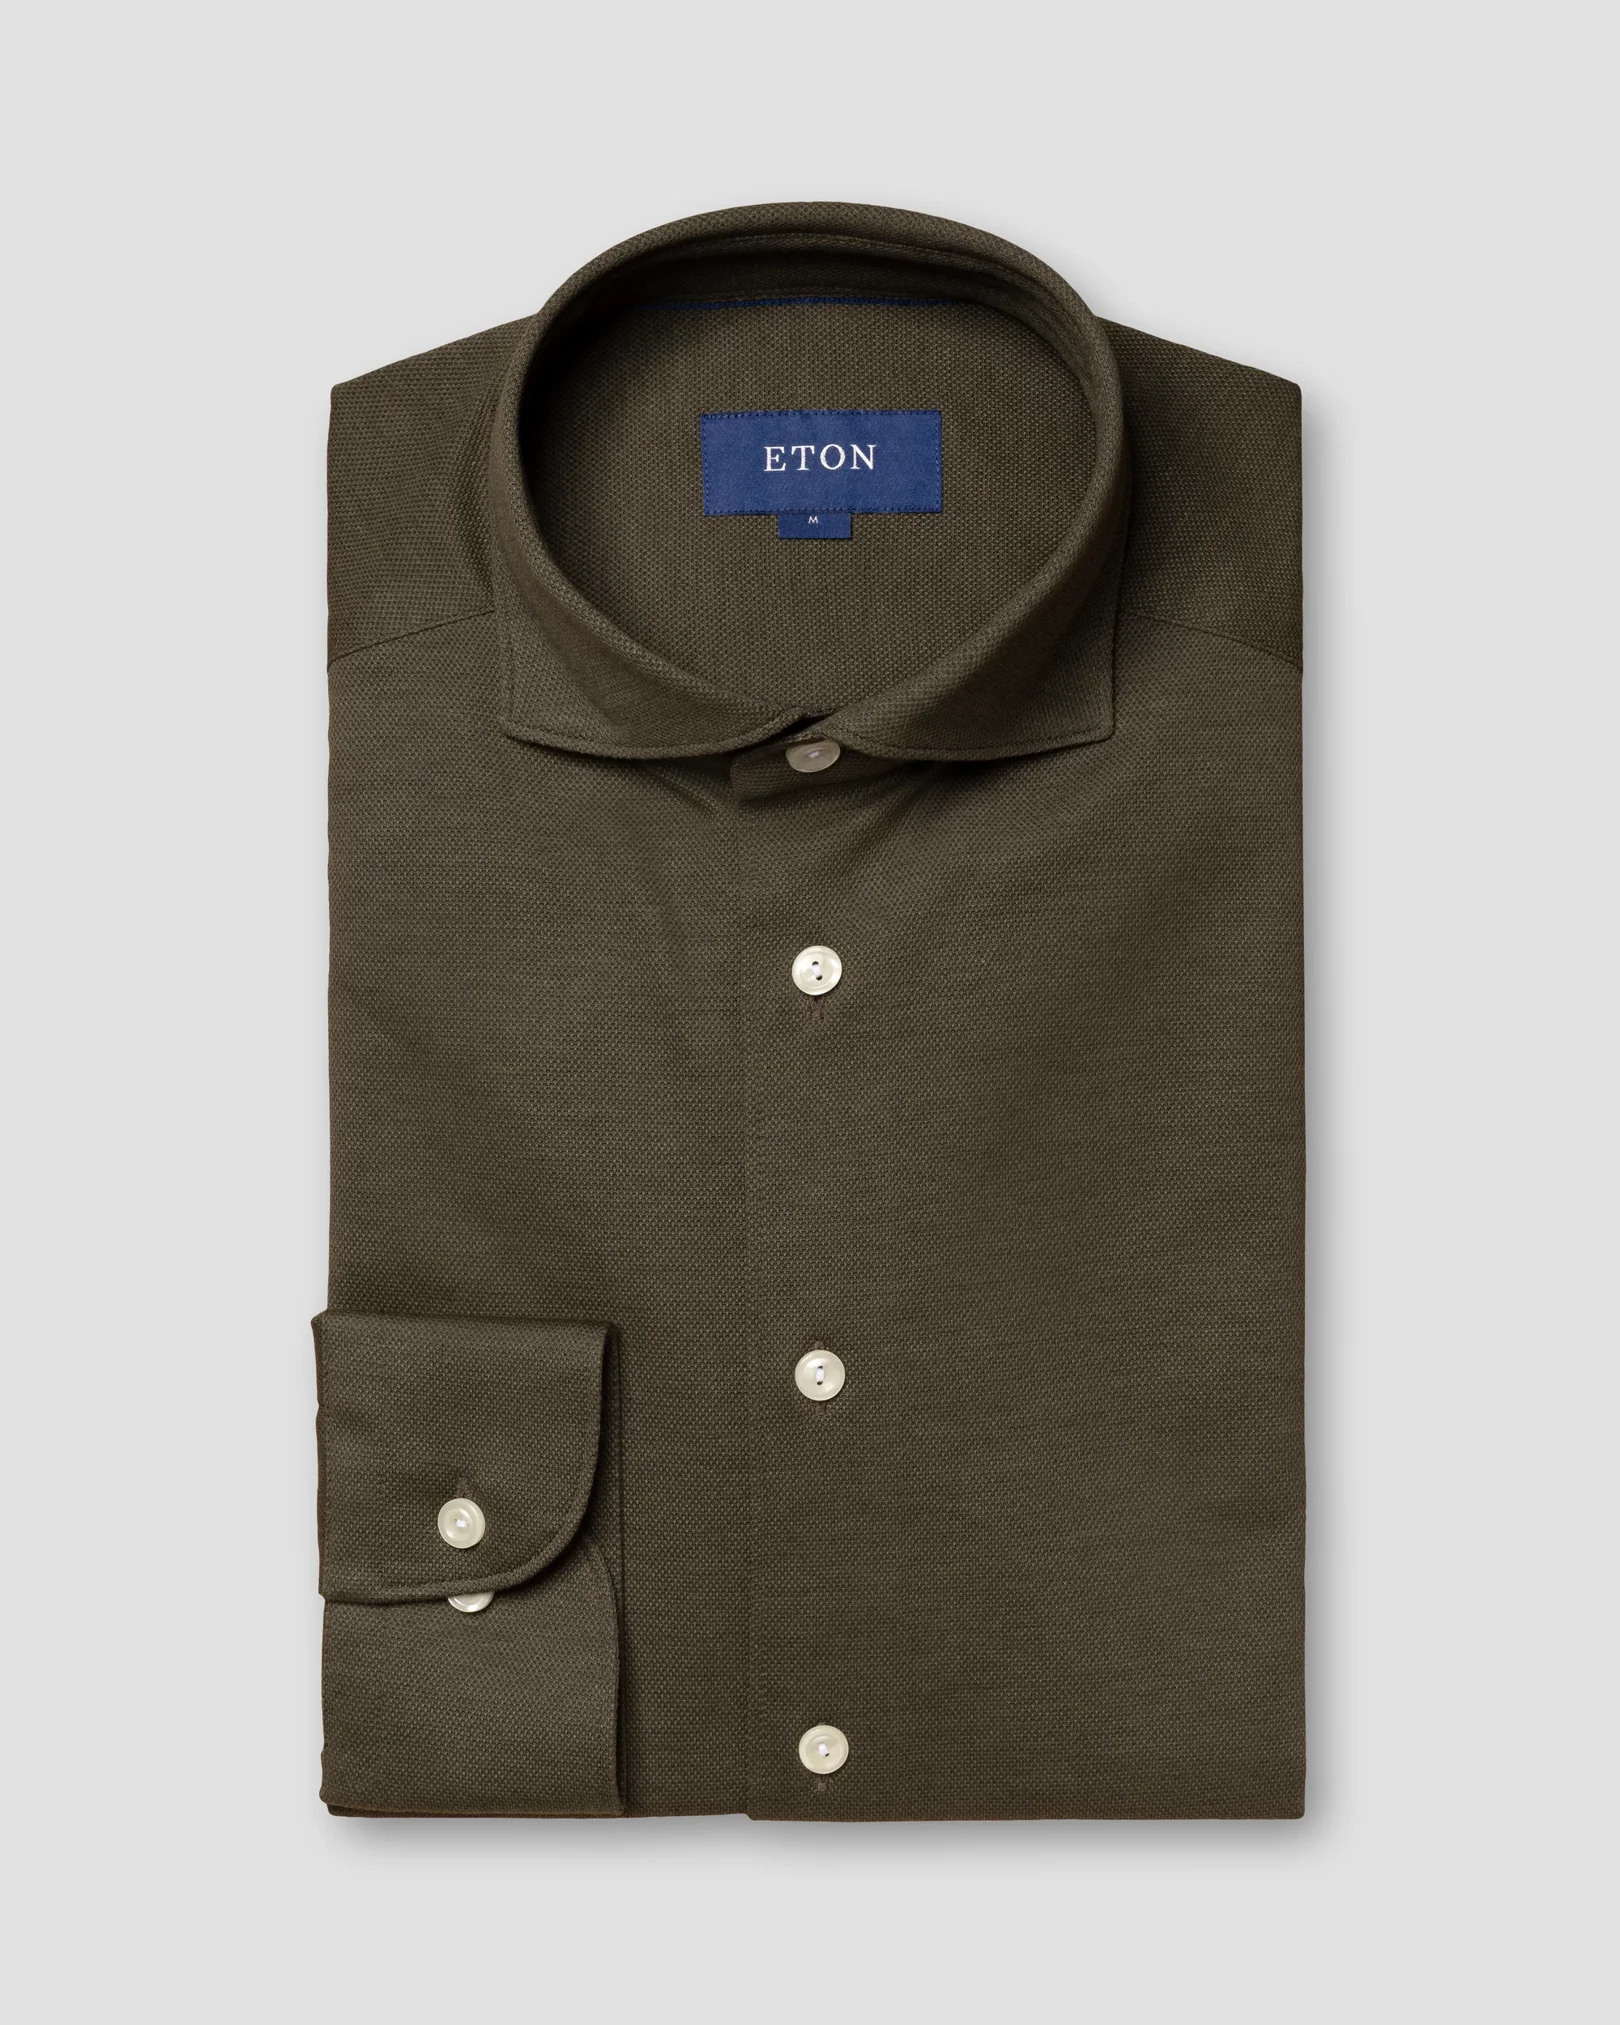 Eton - dark green pique shirt long sleeve